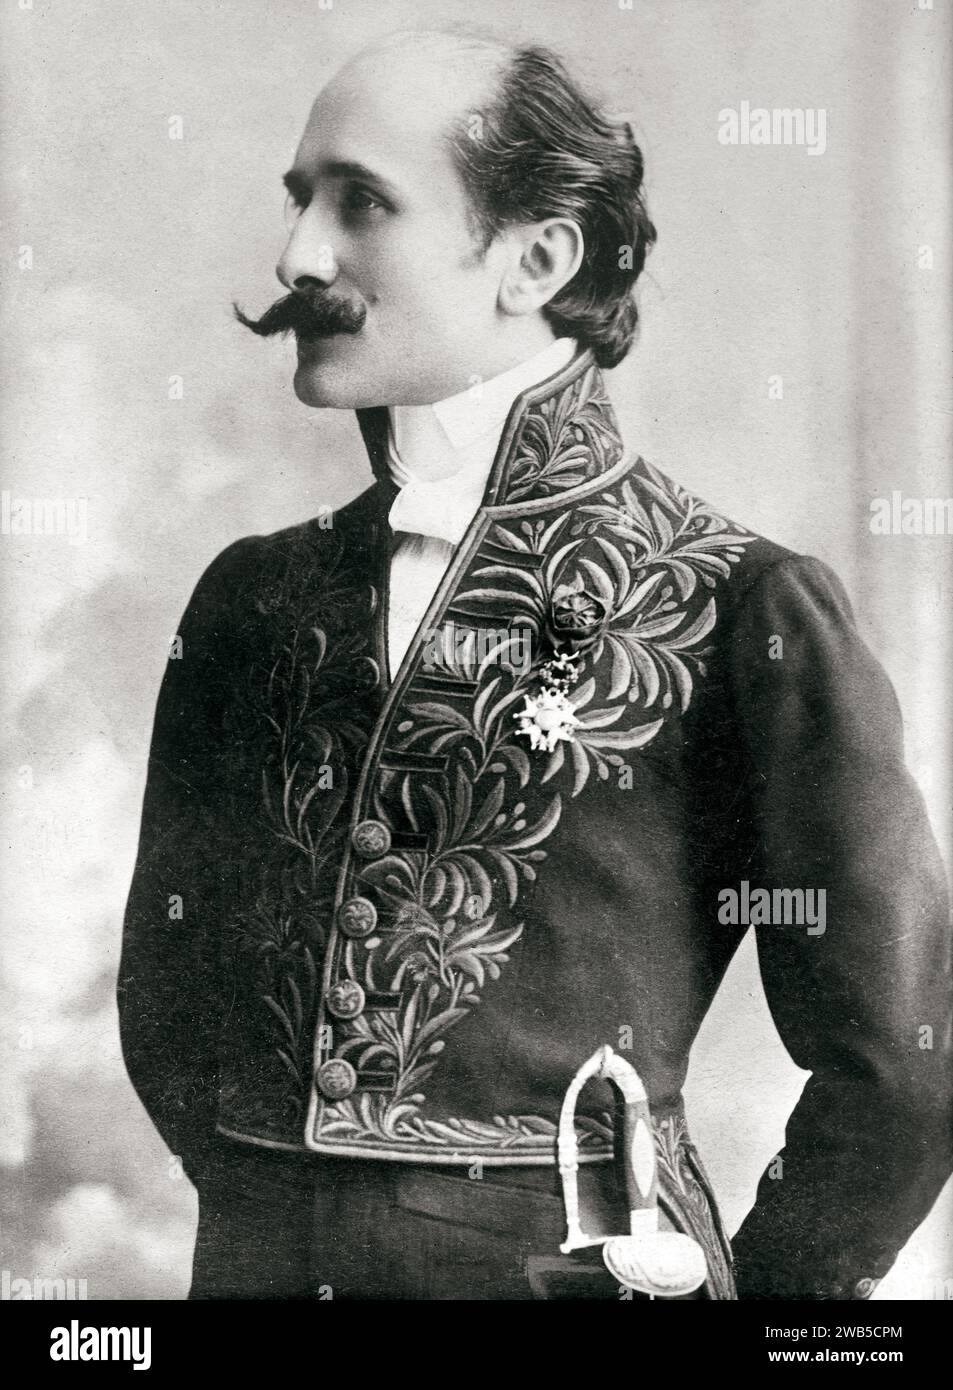 Rostand nell'uniforme dell'Académie francaise, 1905 Léopold-Émile Reutlinger Edmond Eugène Alexis Rostand (1868 – 1918) poeta e drammaturgo francese. Foto Stock